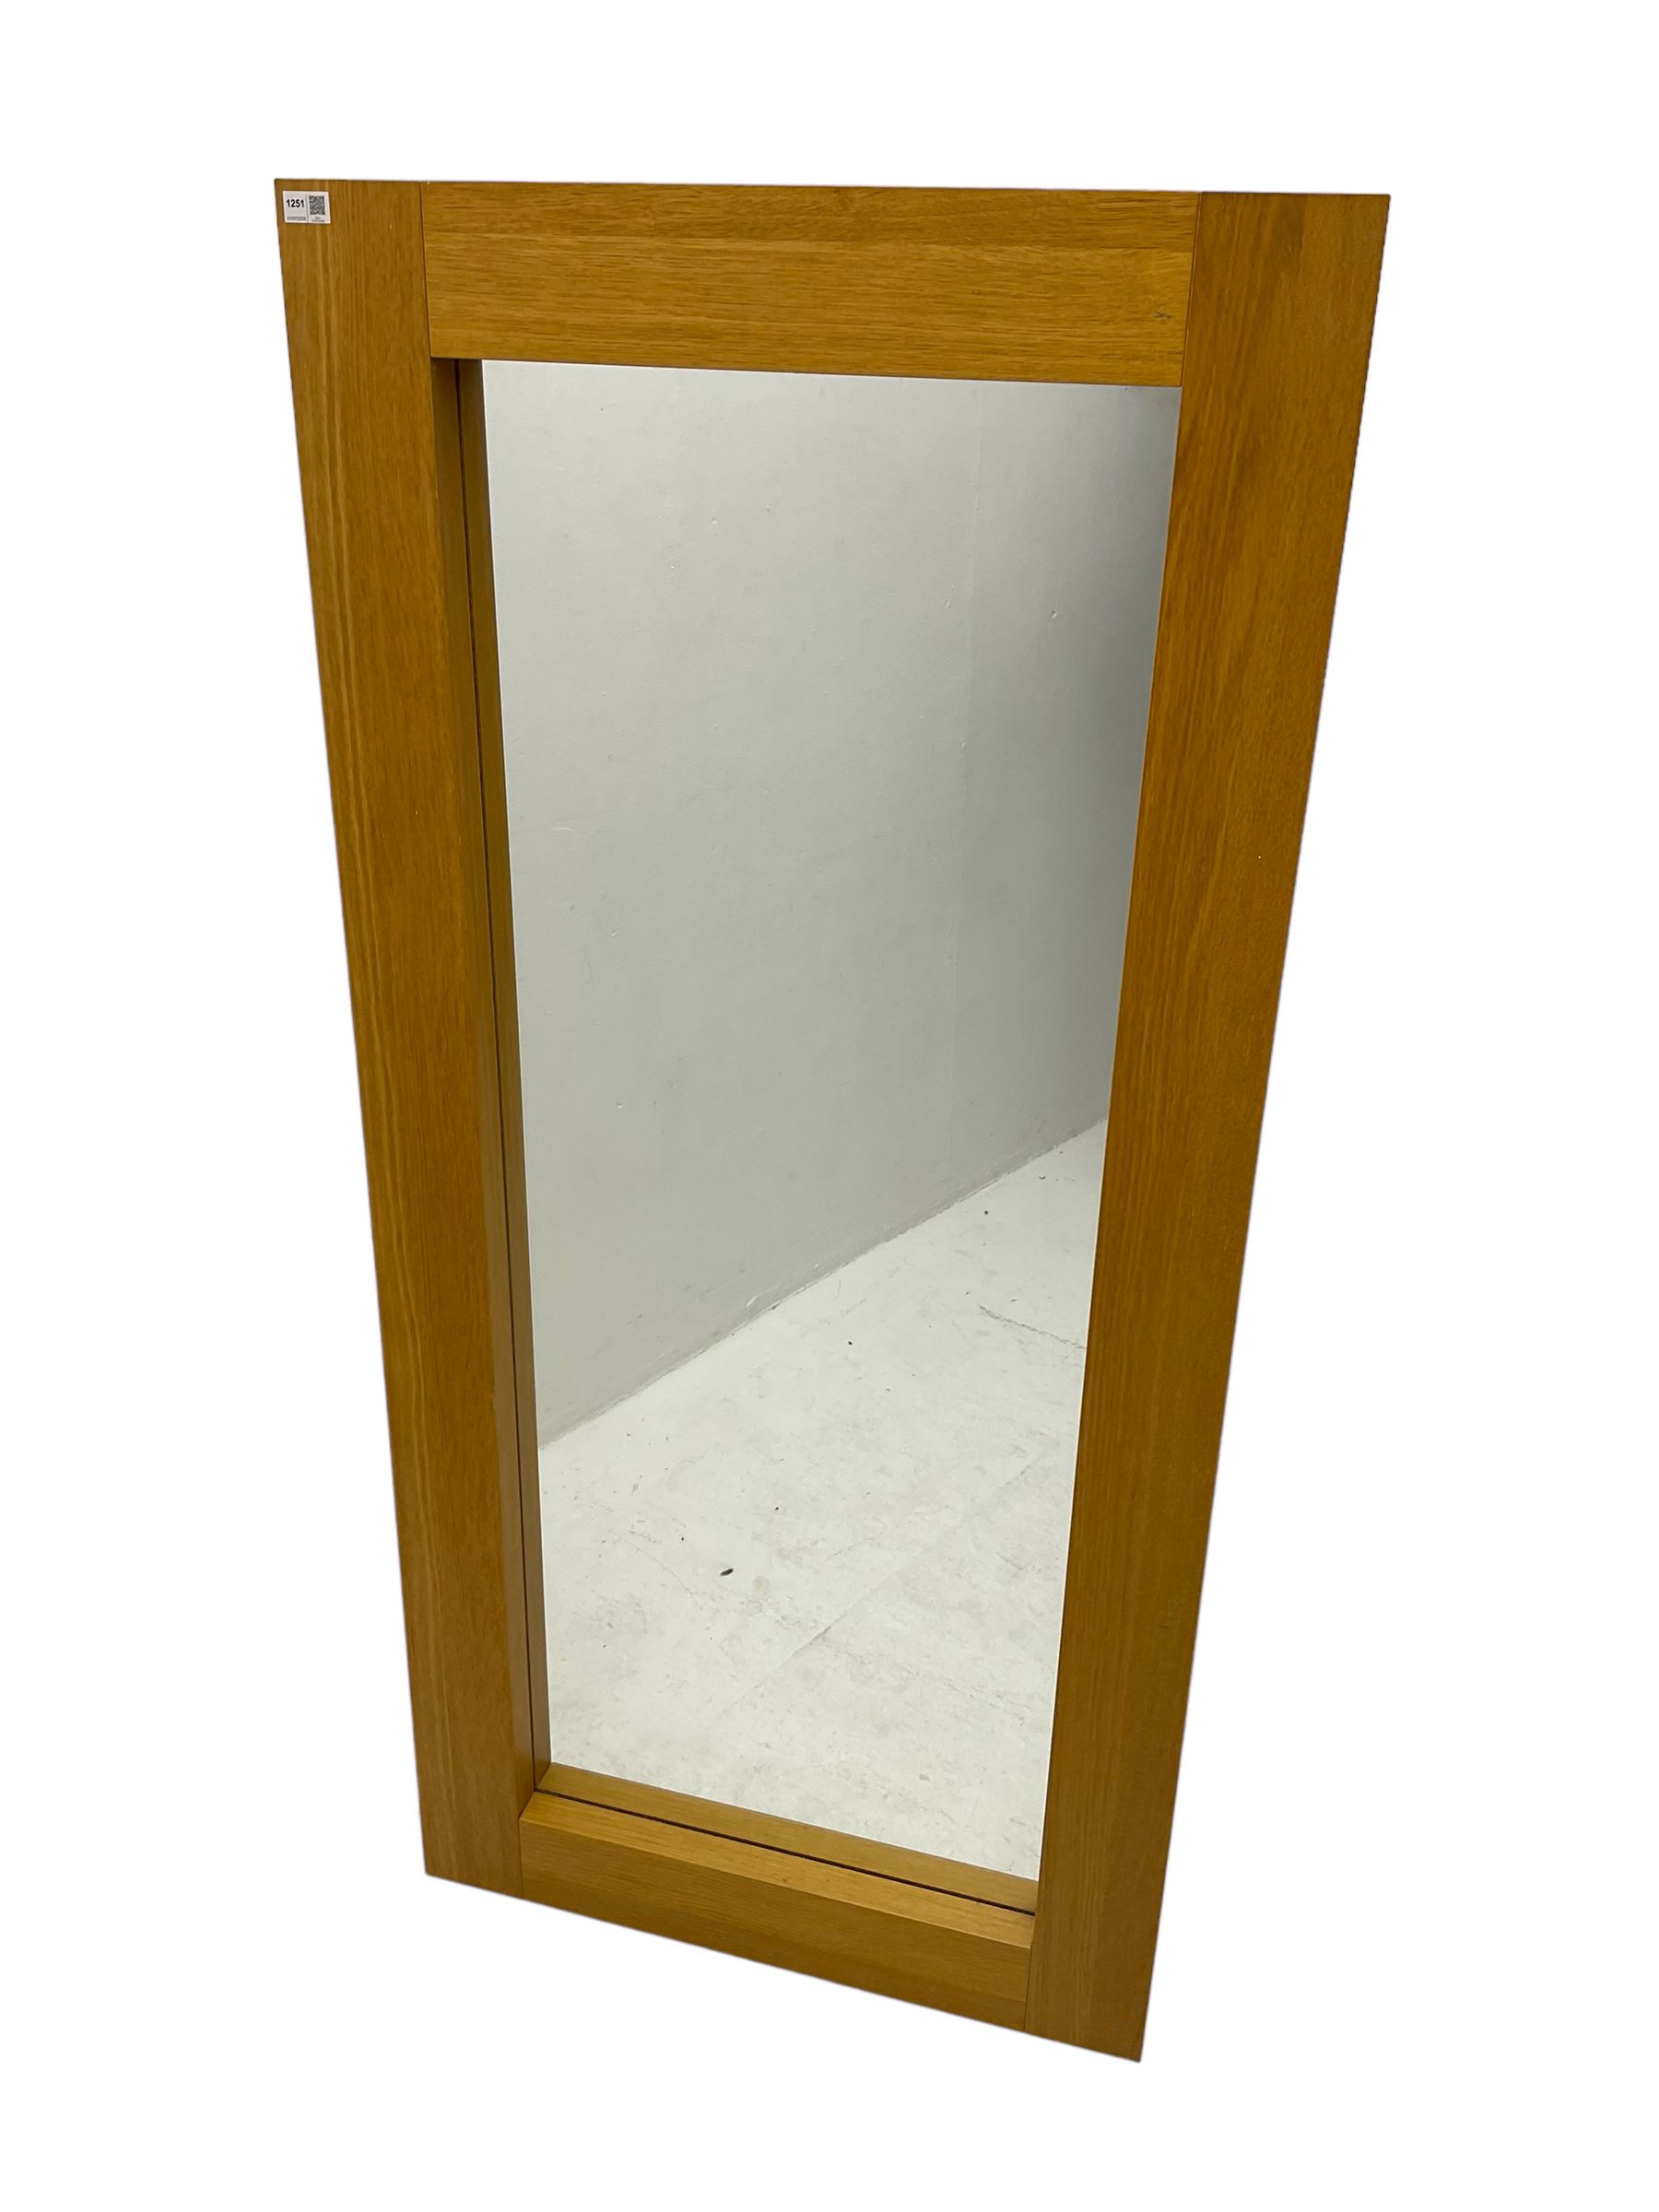 Contemporary oak framed mirror - Image 9 of 10